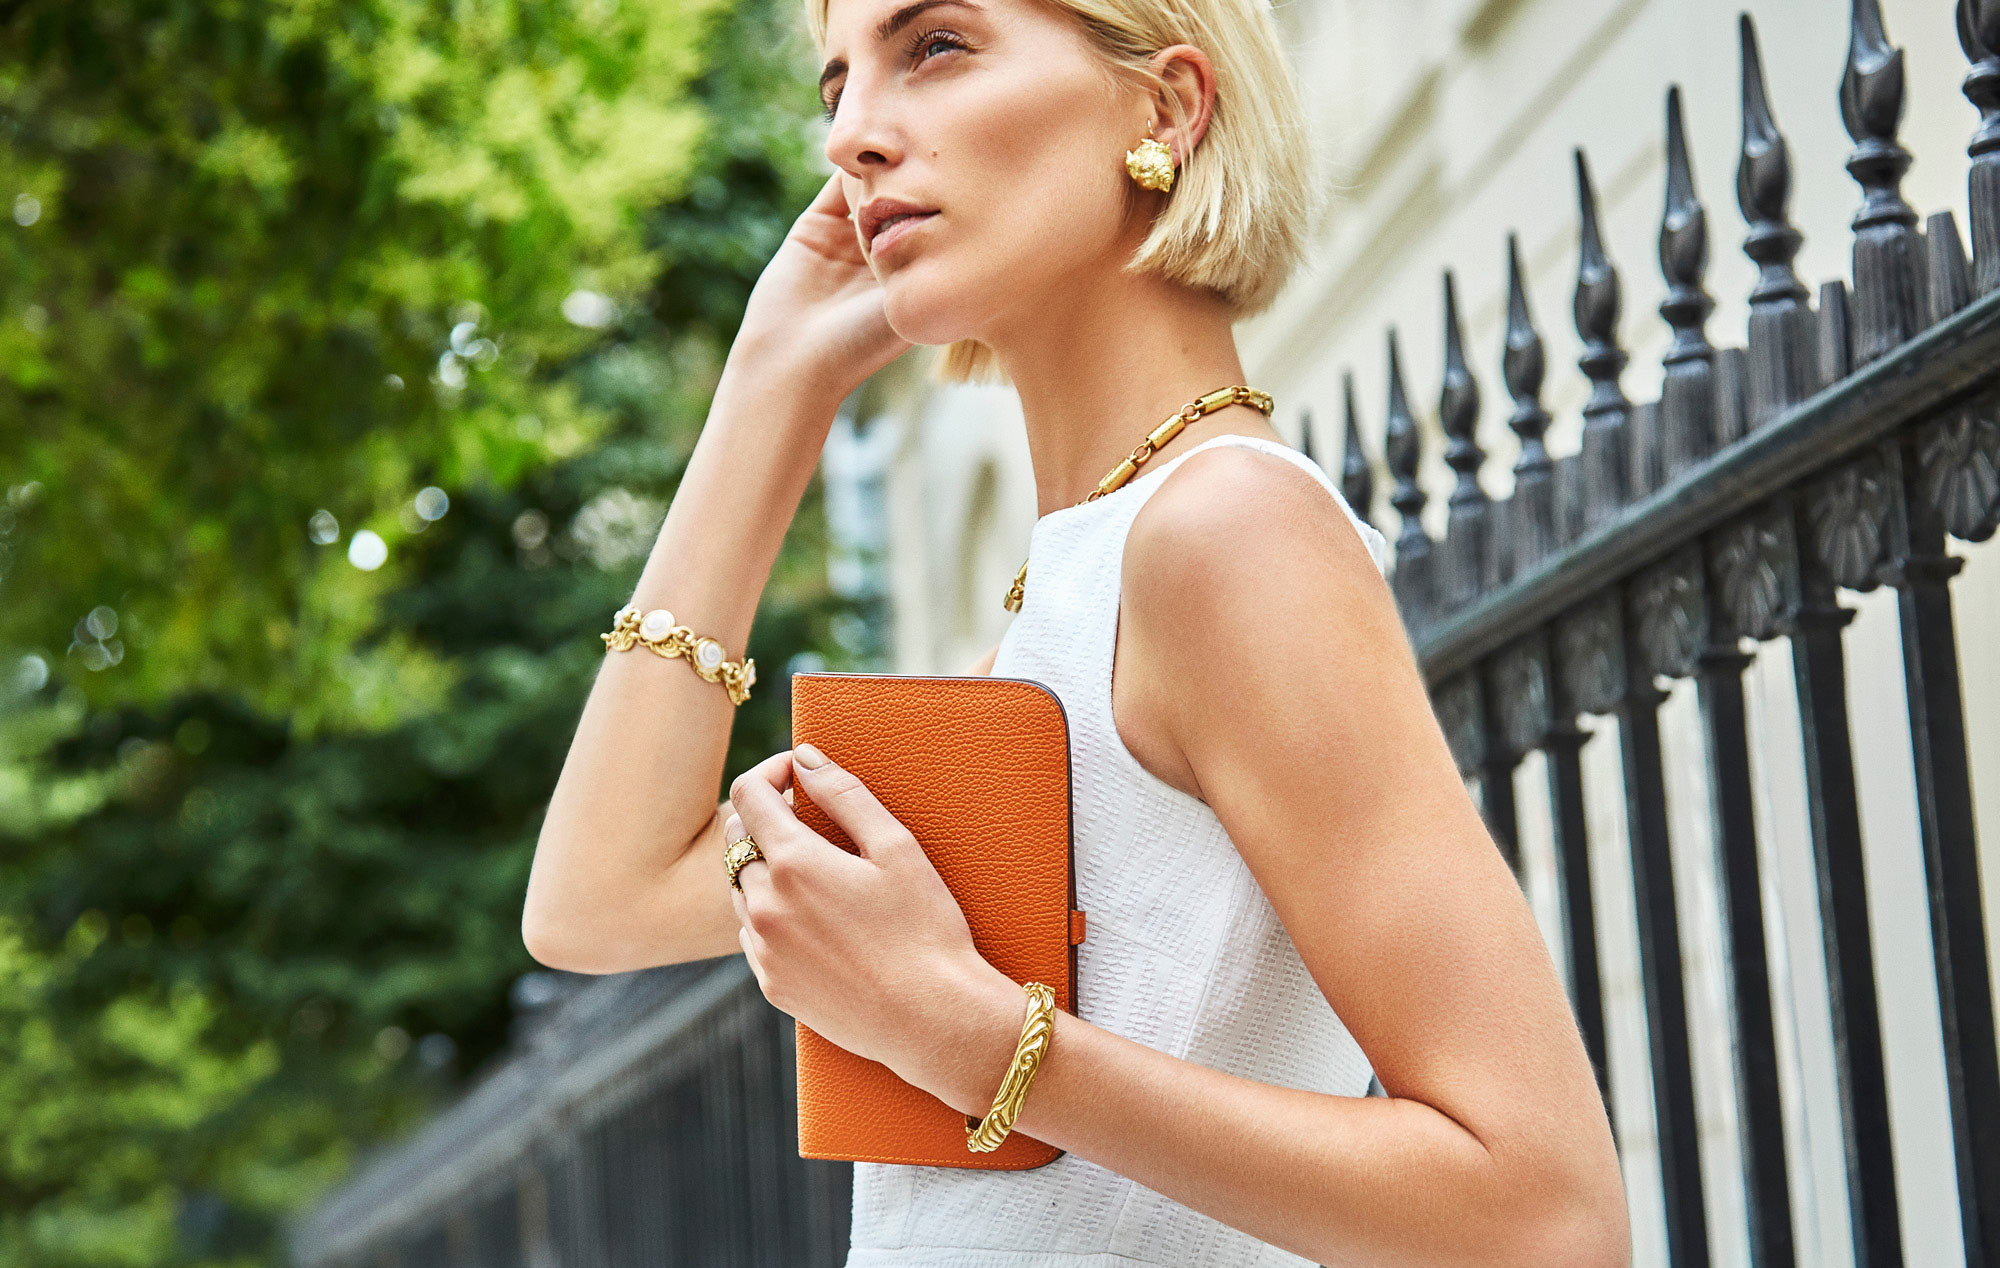 Lifestyle photographer london - model wearing designer jewels carrying leather handbag.  Advertising  photography for luxury jeweller